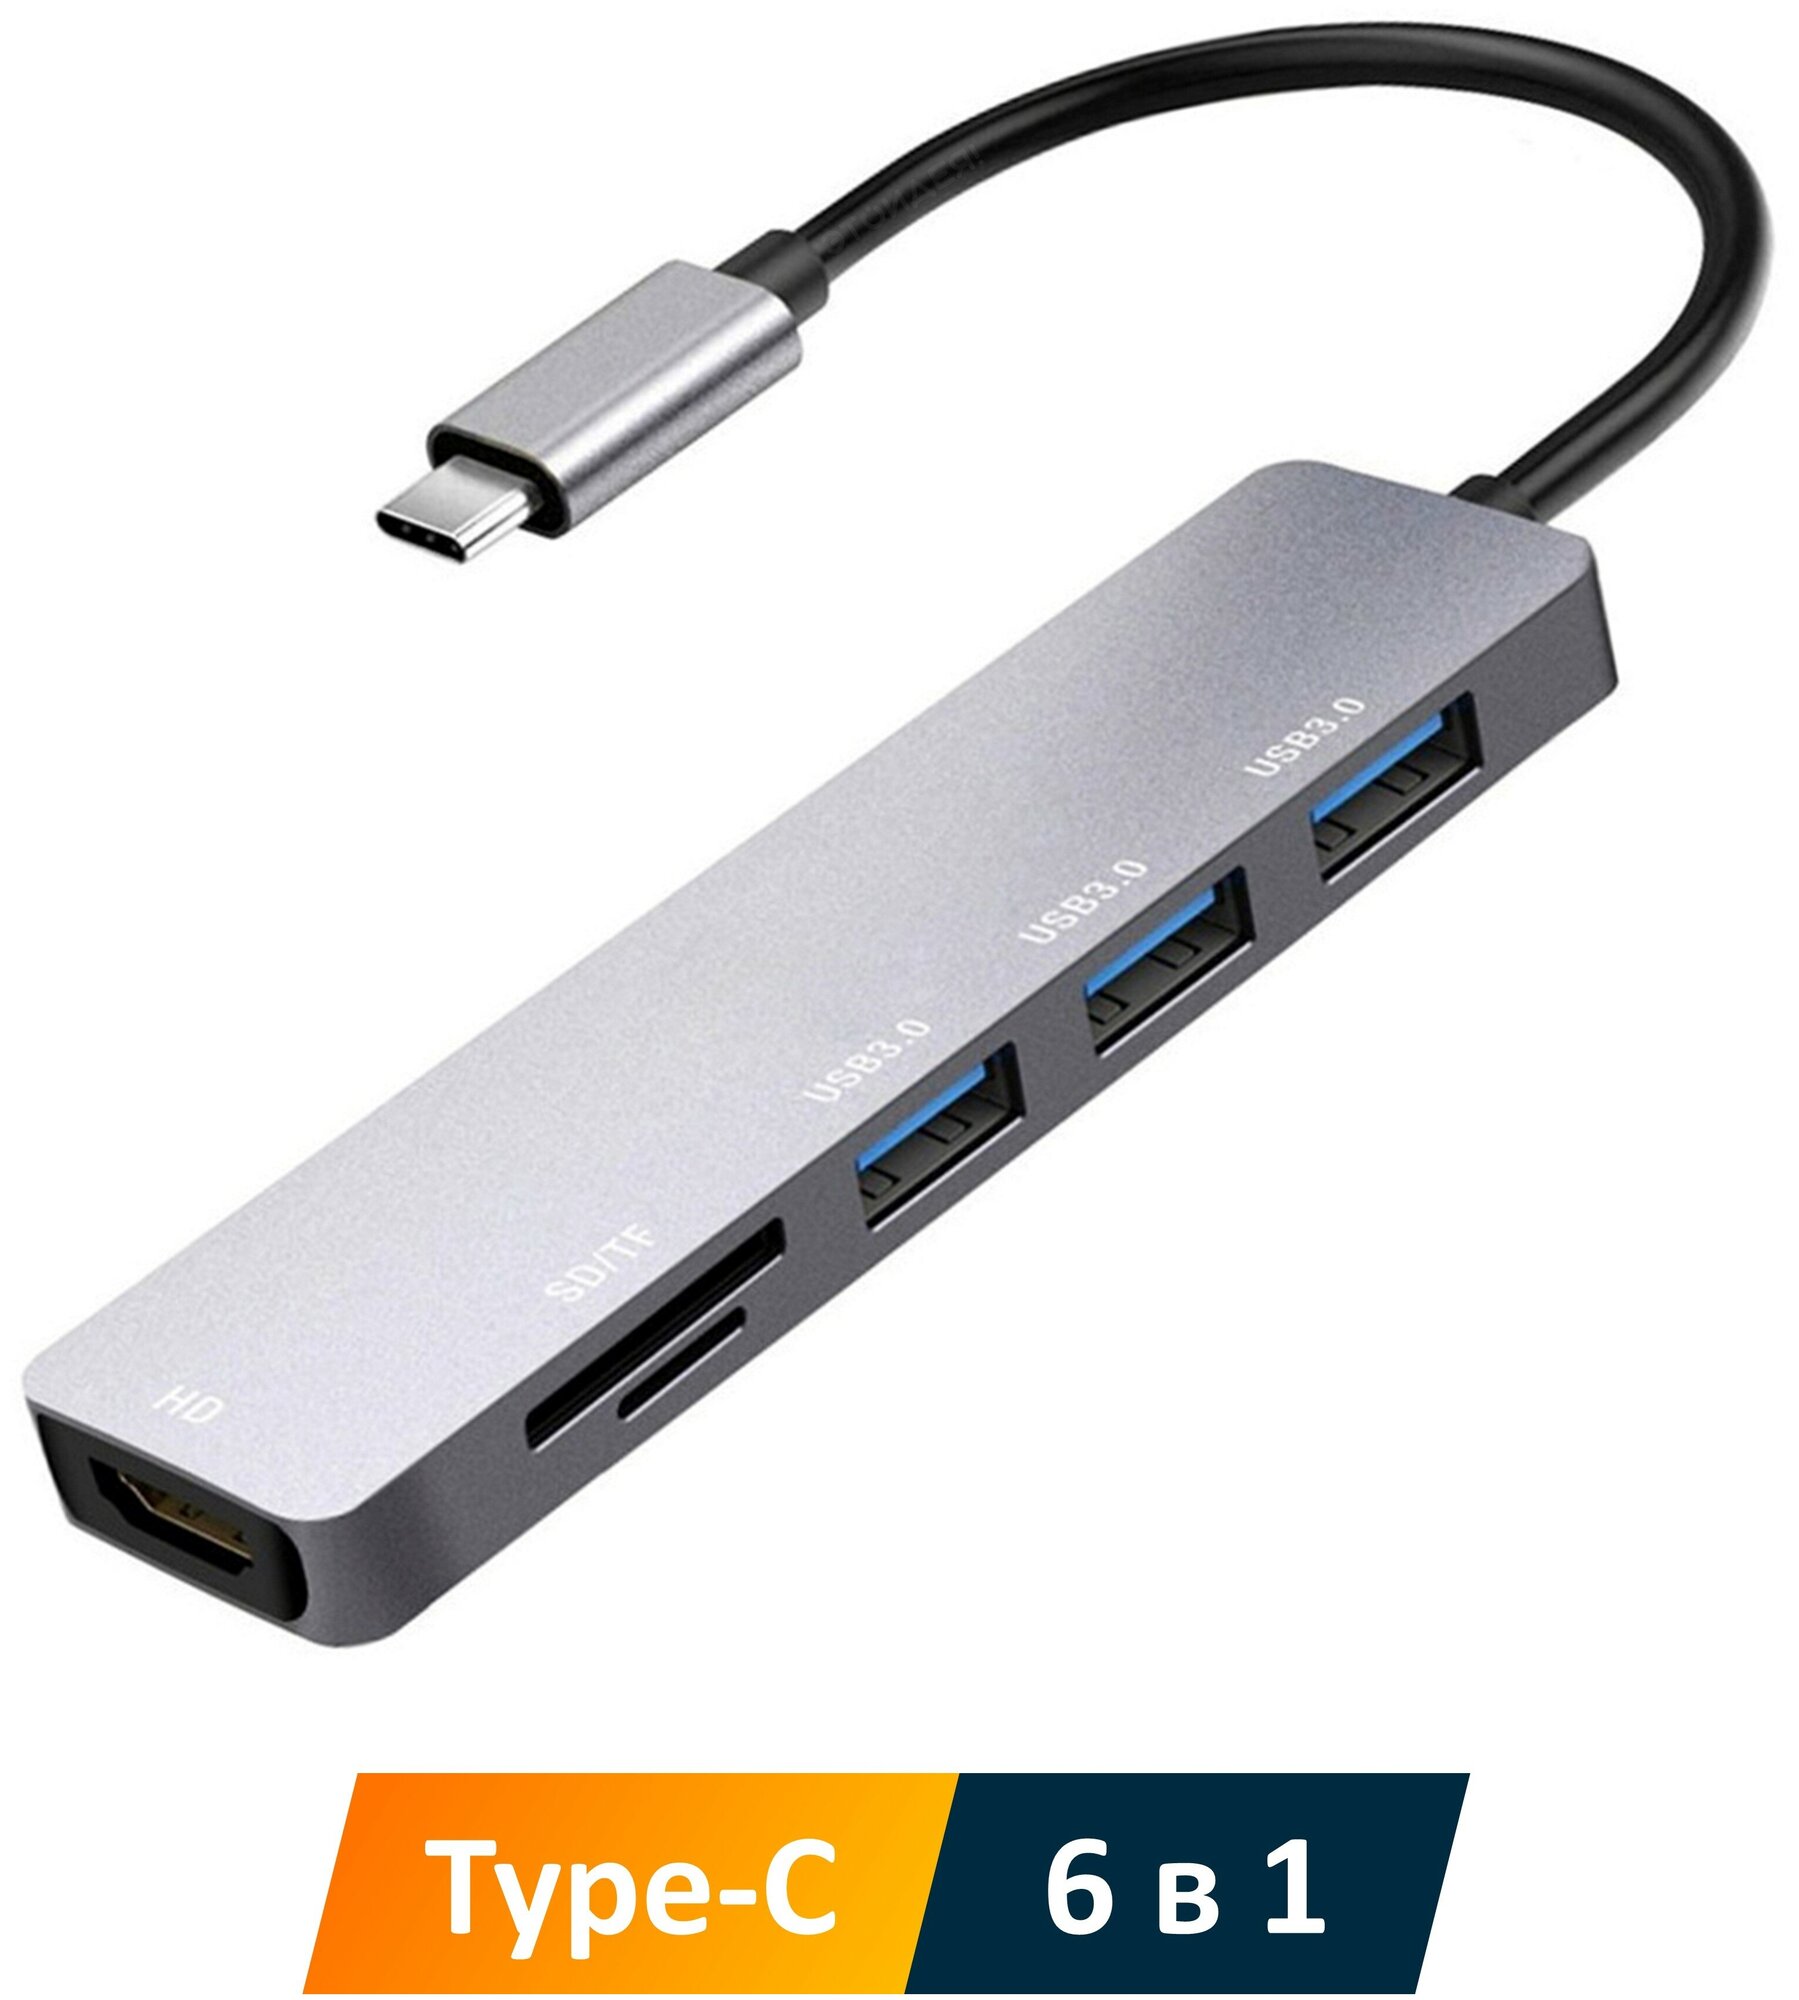 USB Type-C хаб 6 в 1 для MacBook, ноутбука, компьютера: 3 порта USB 3.0, HDMI, кардридер (SD, microSD), темно-серый алюминий